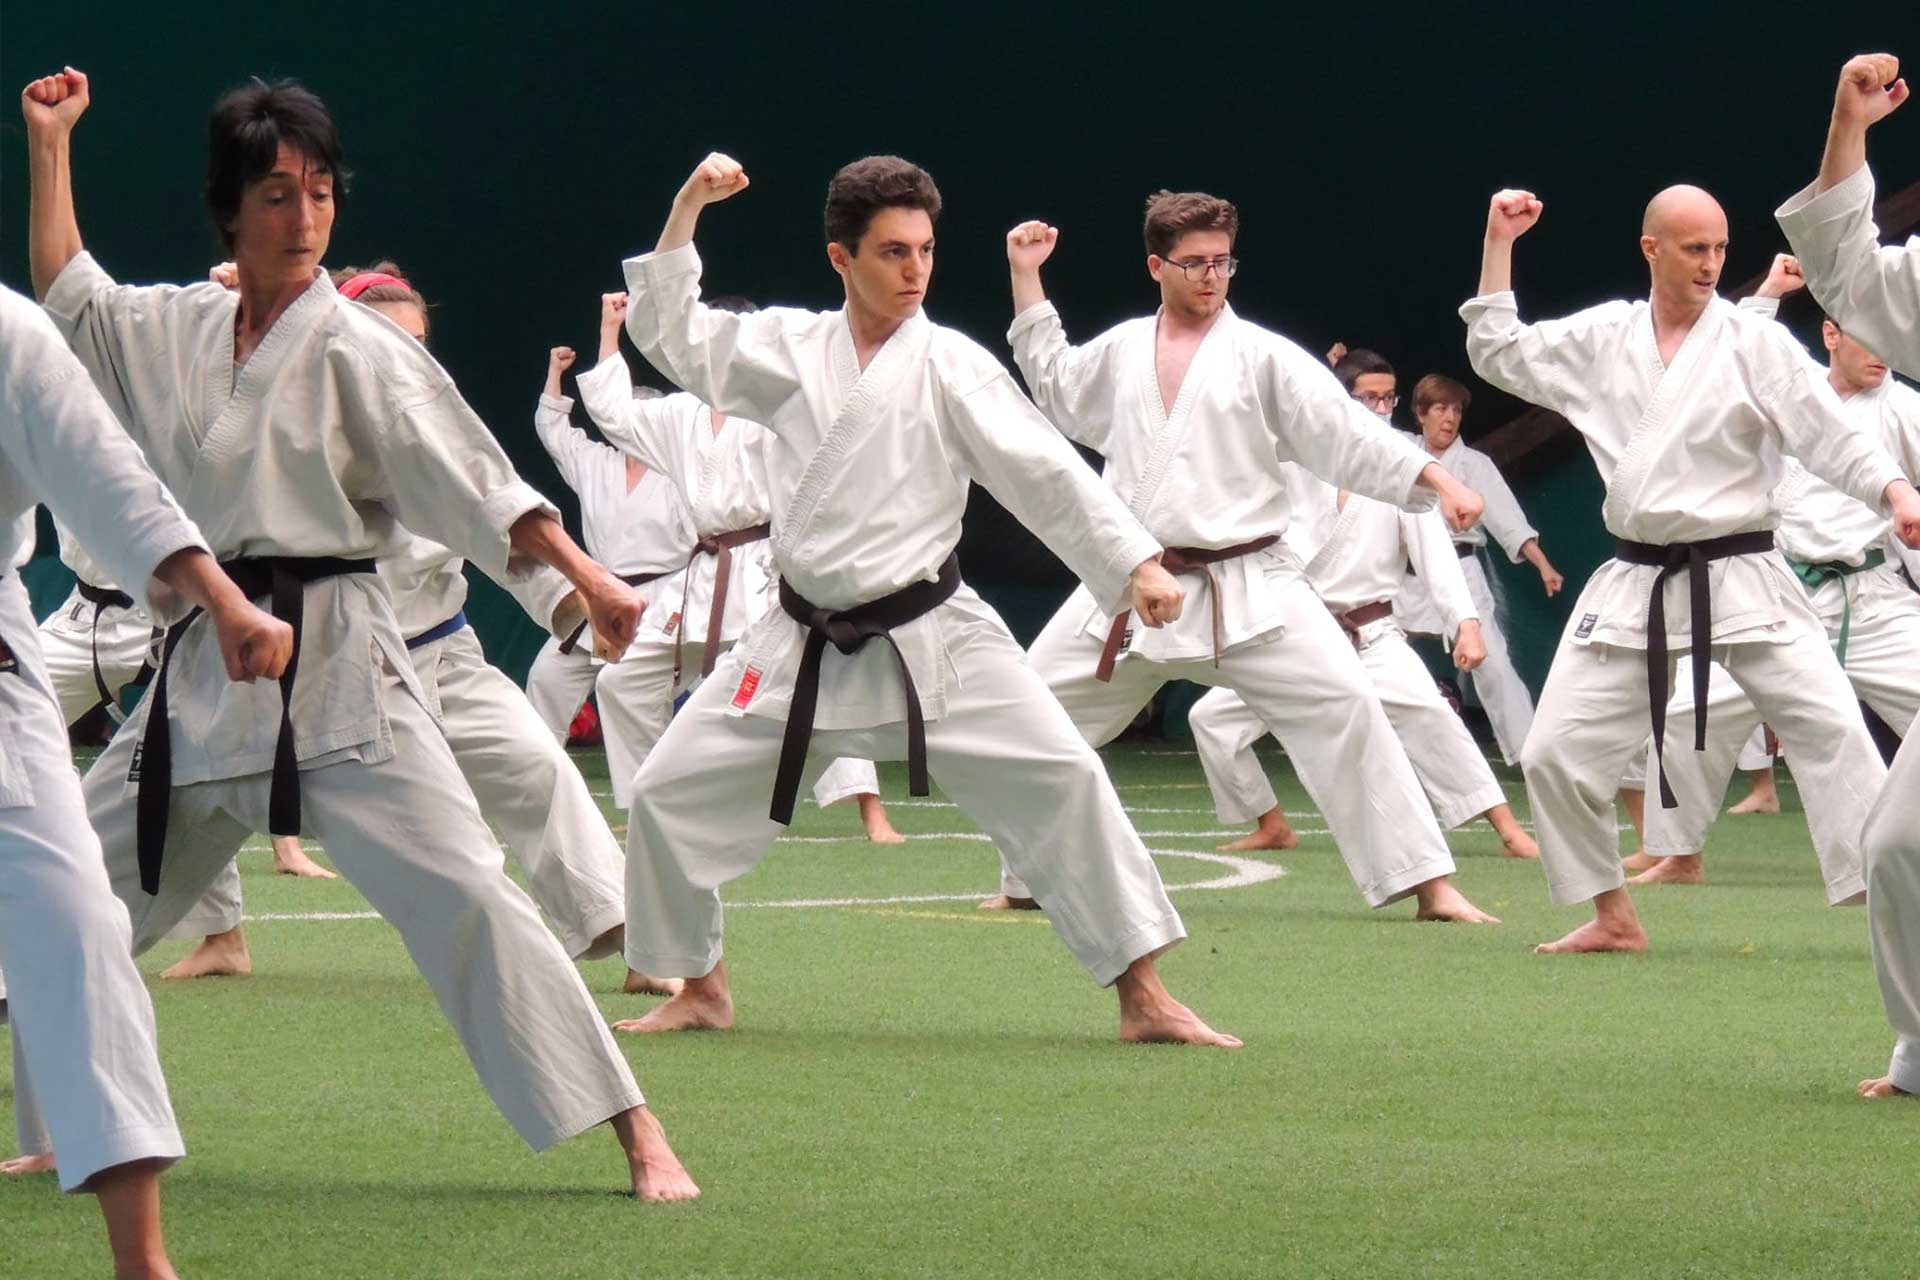 Nikamon - Corsi Karate bambini